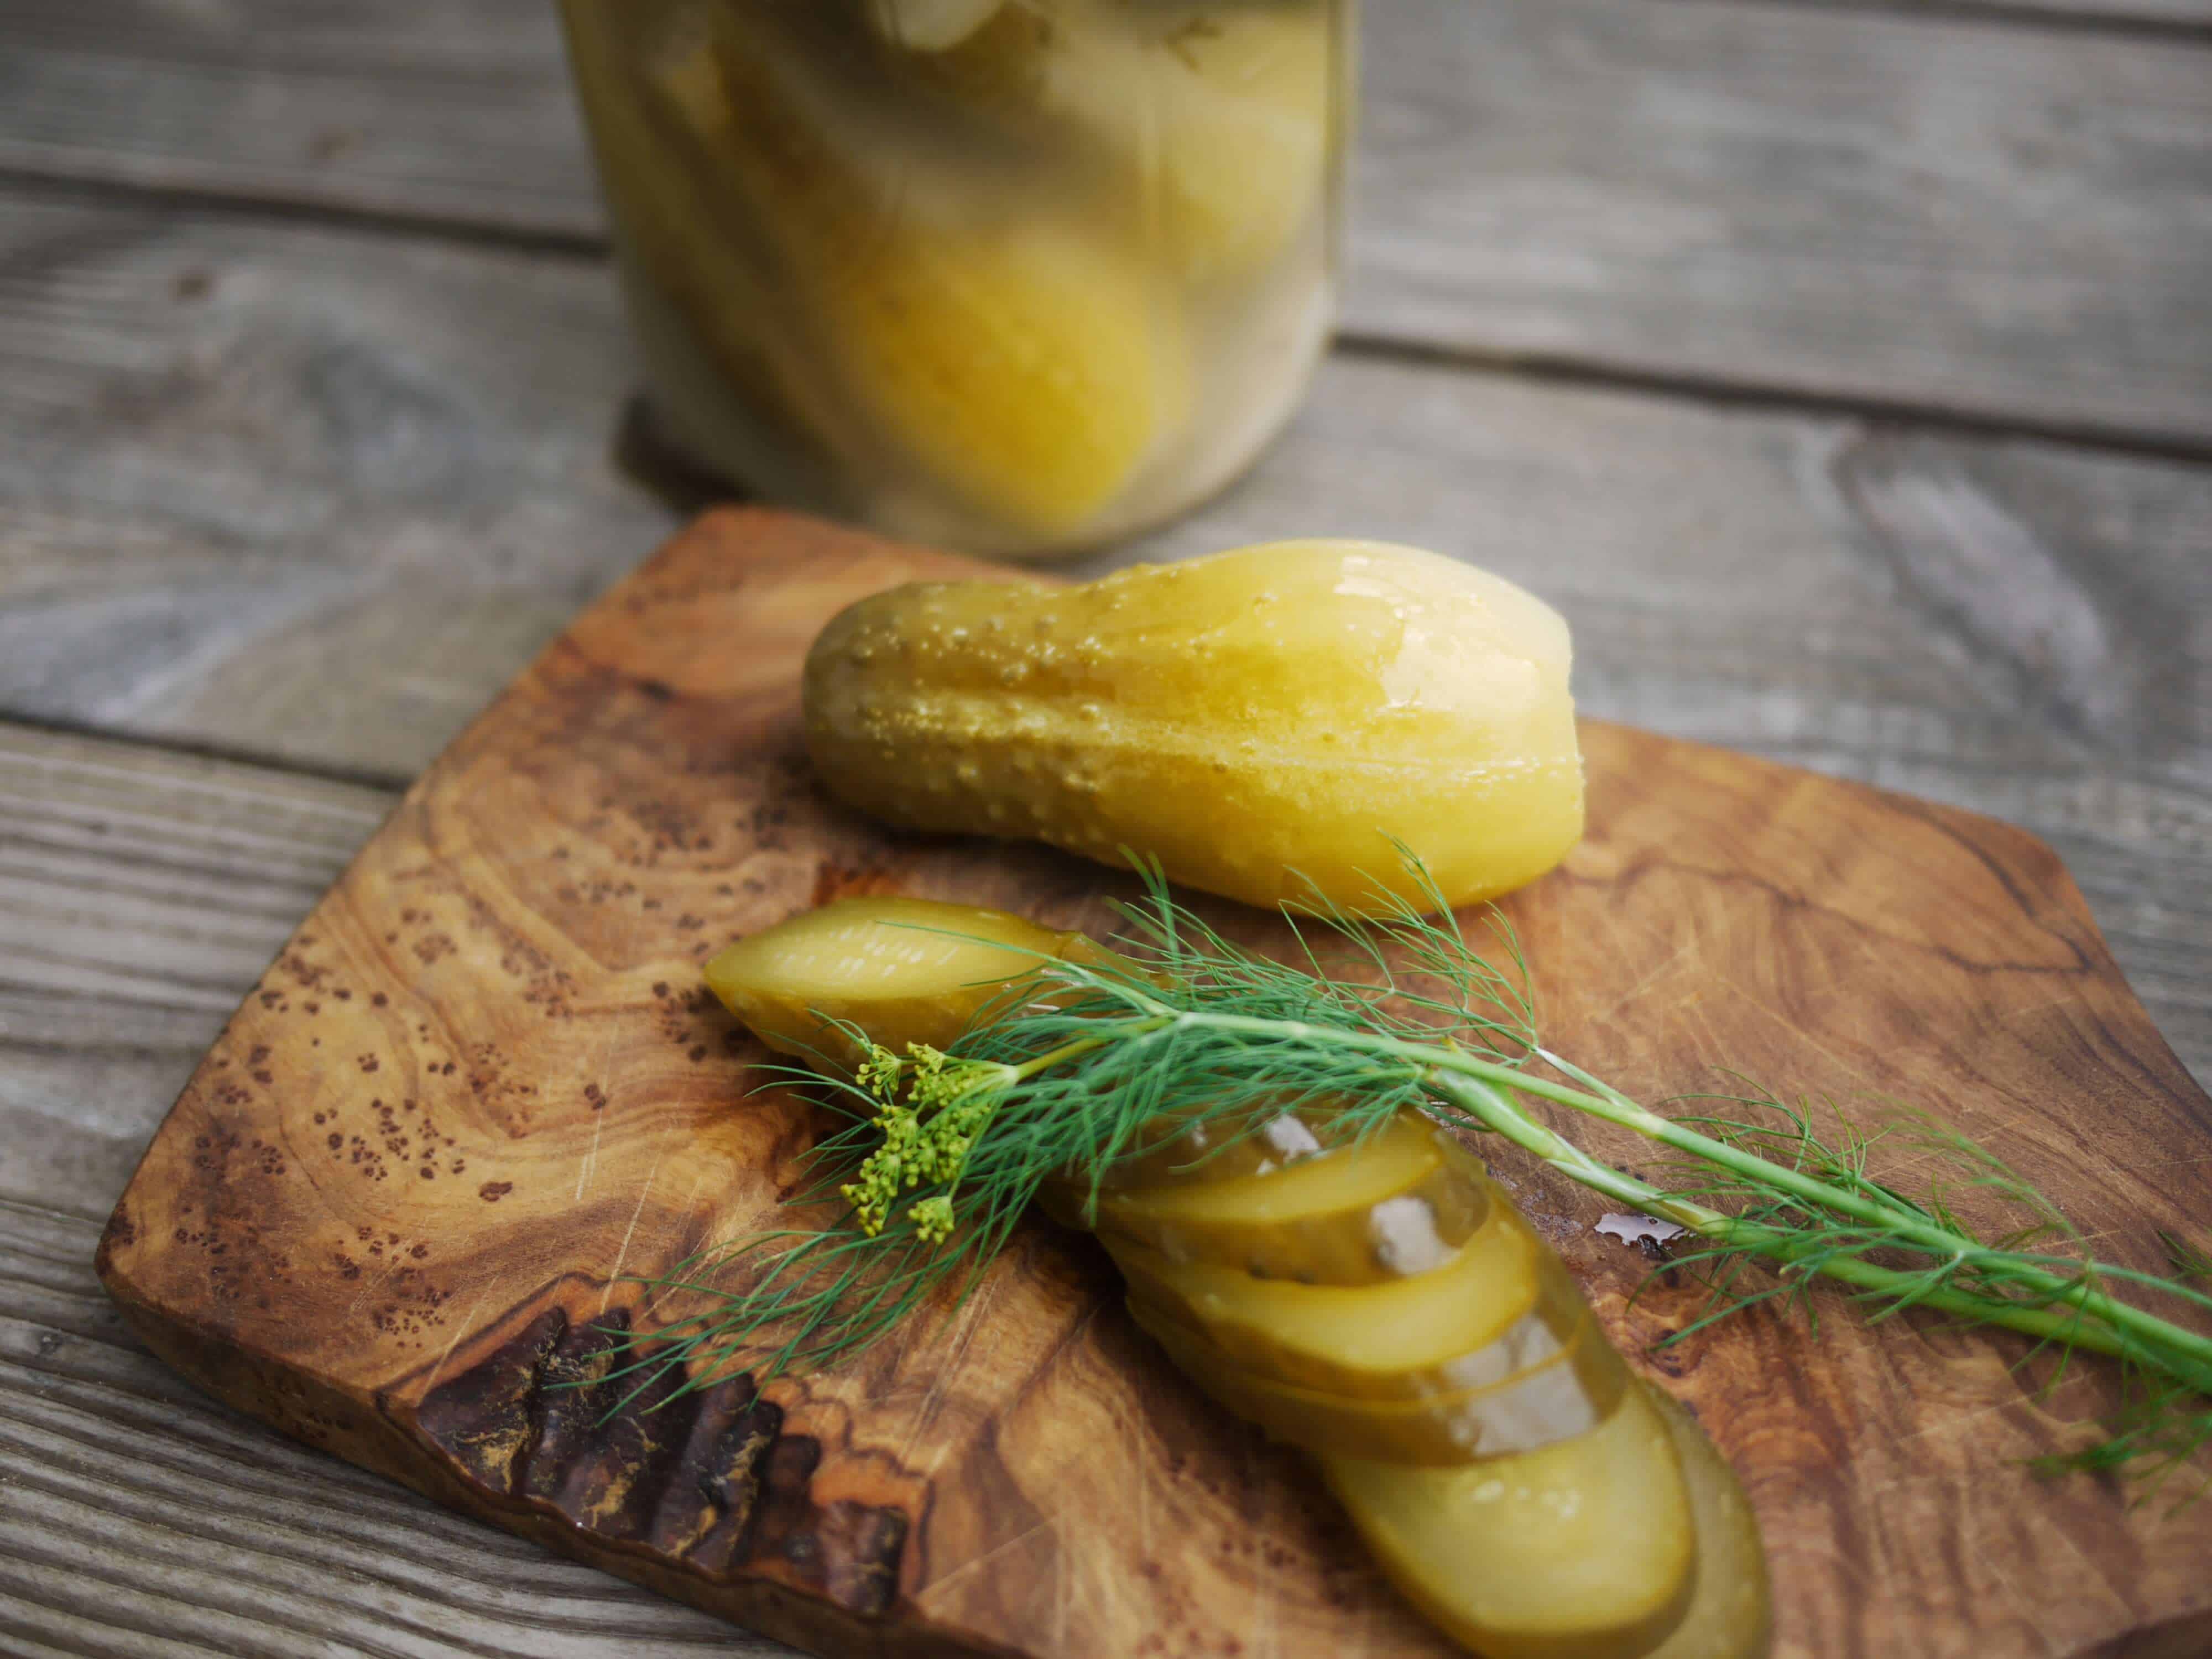 Sliced homemade pickles and jar